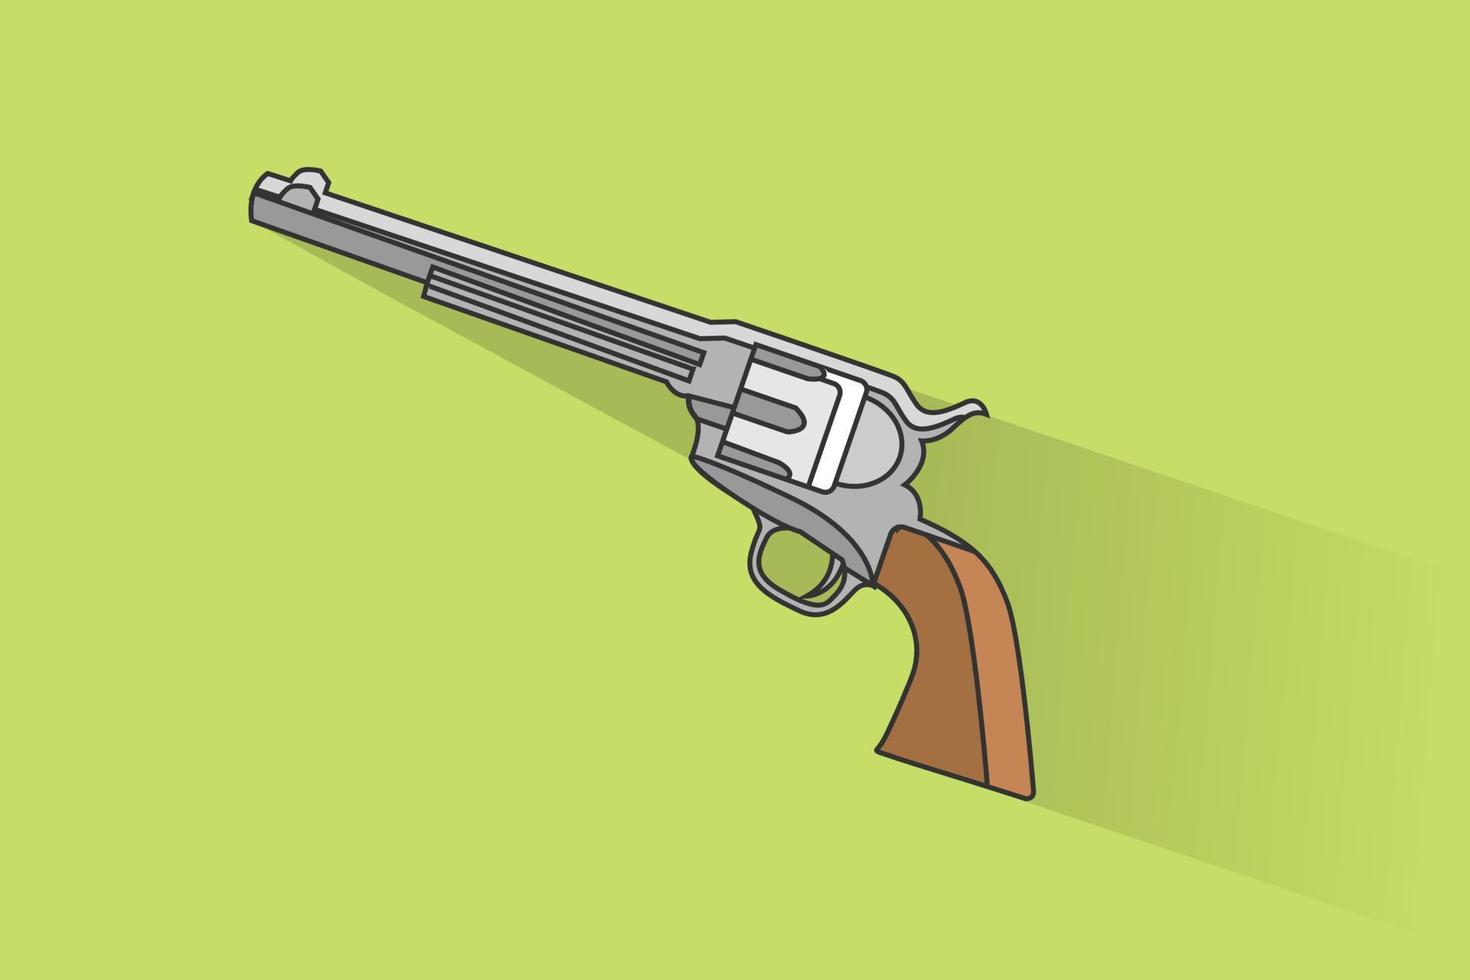 colt revolver gun vector illustration with line